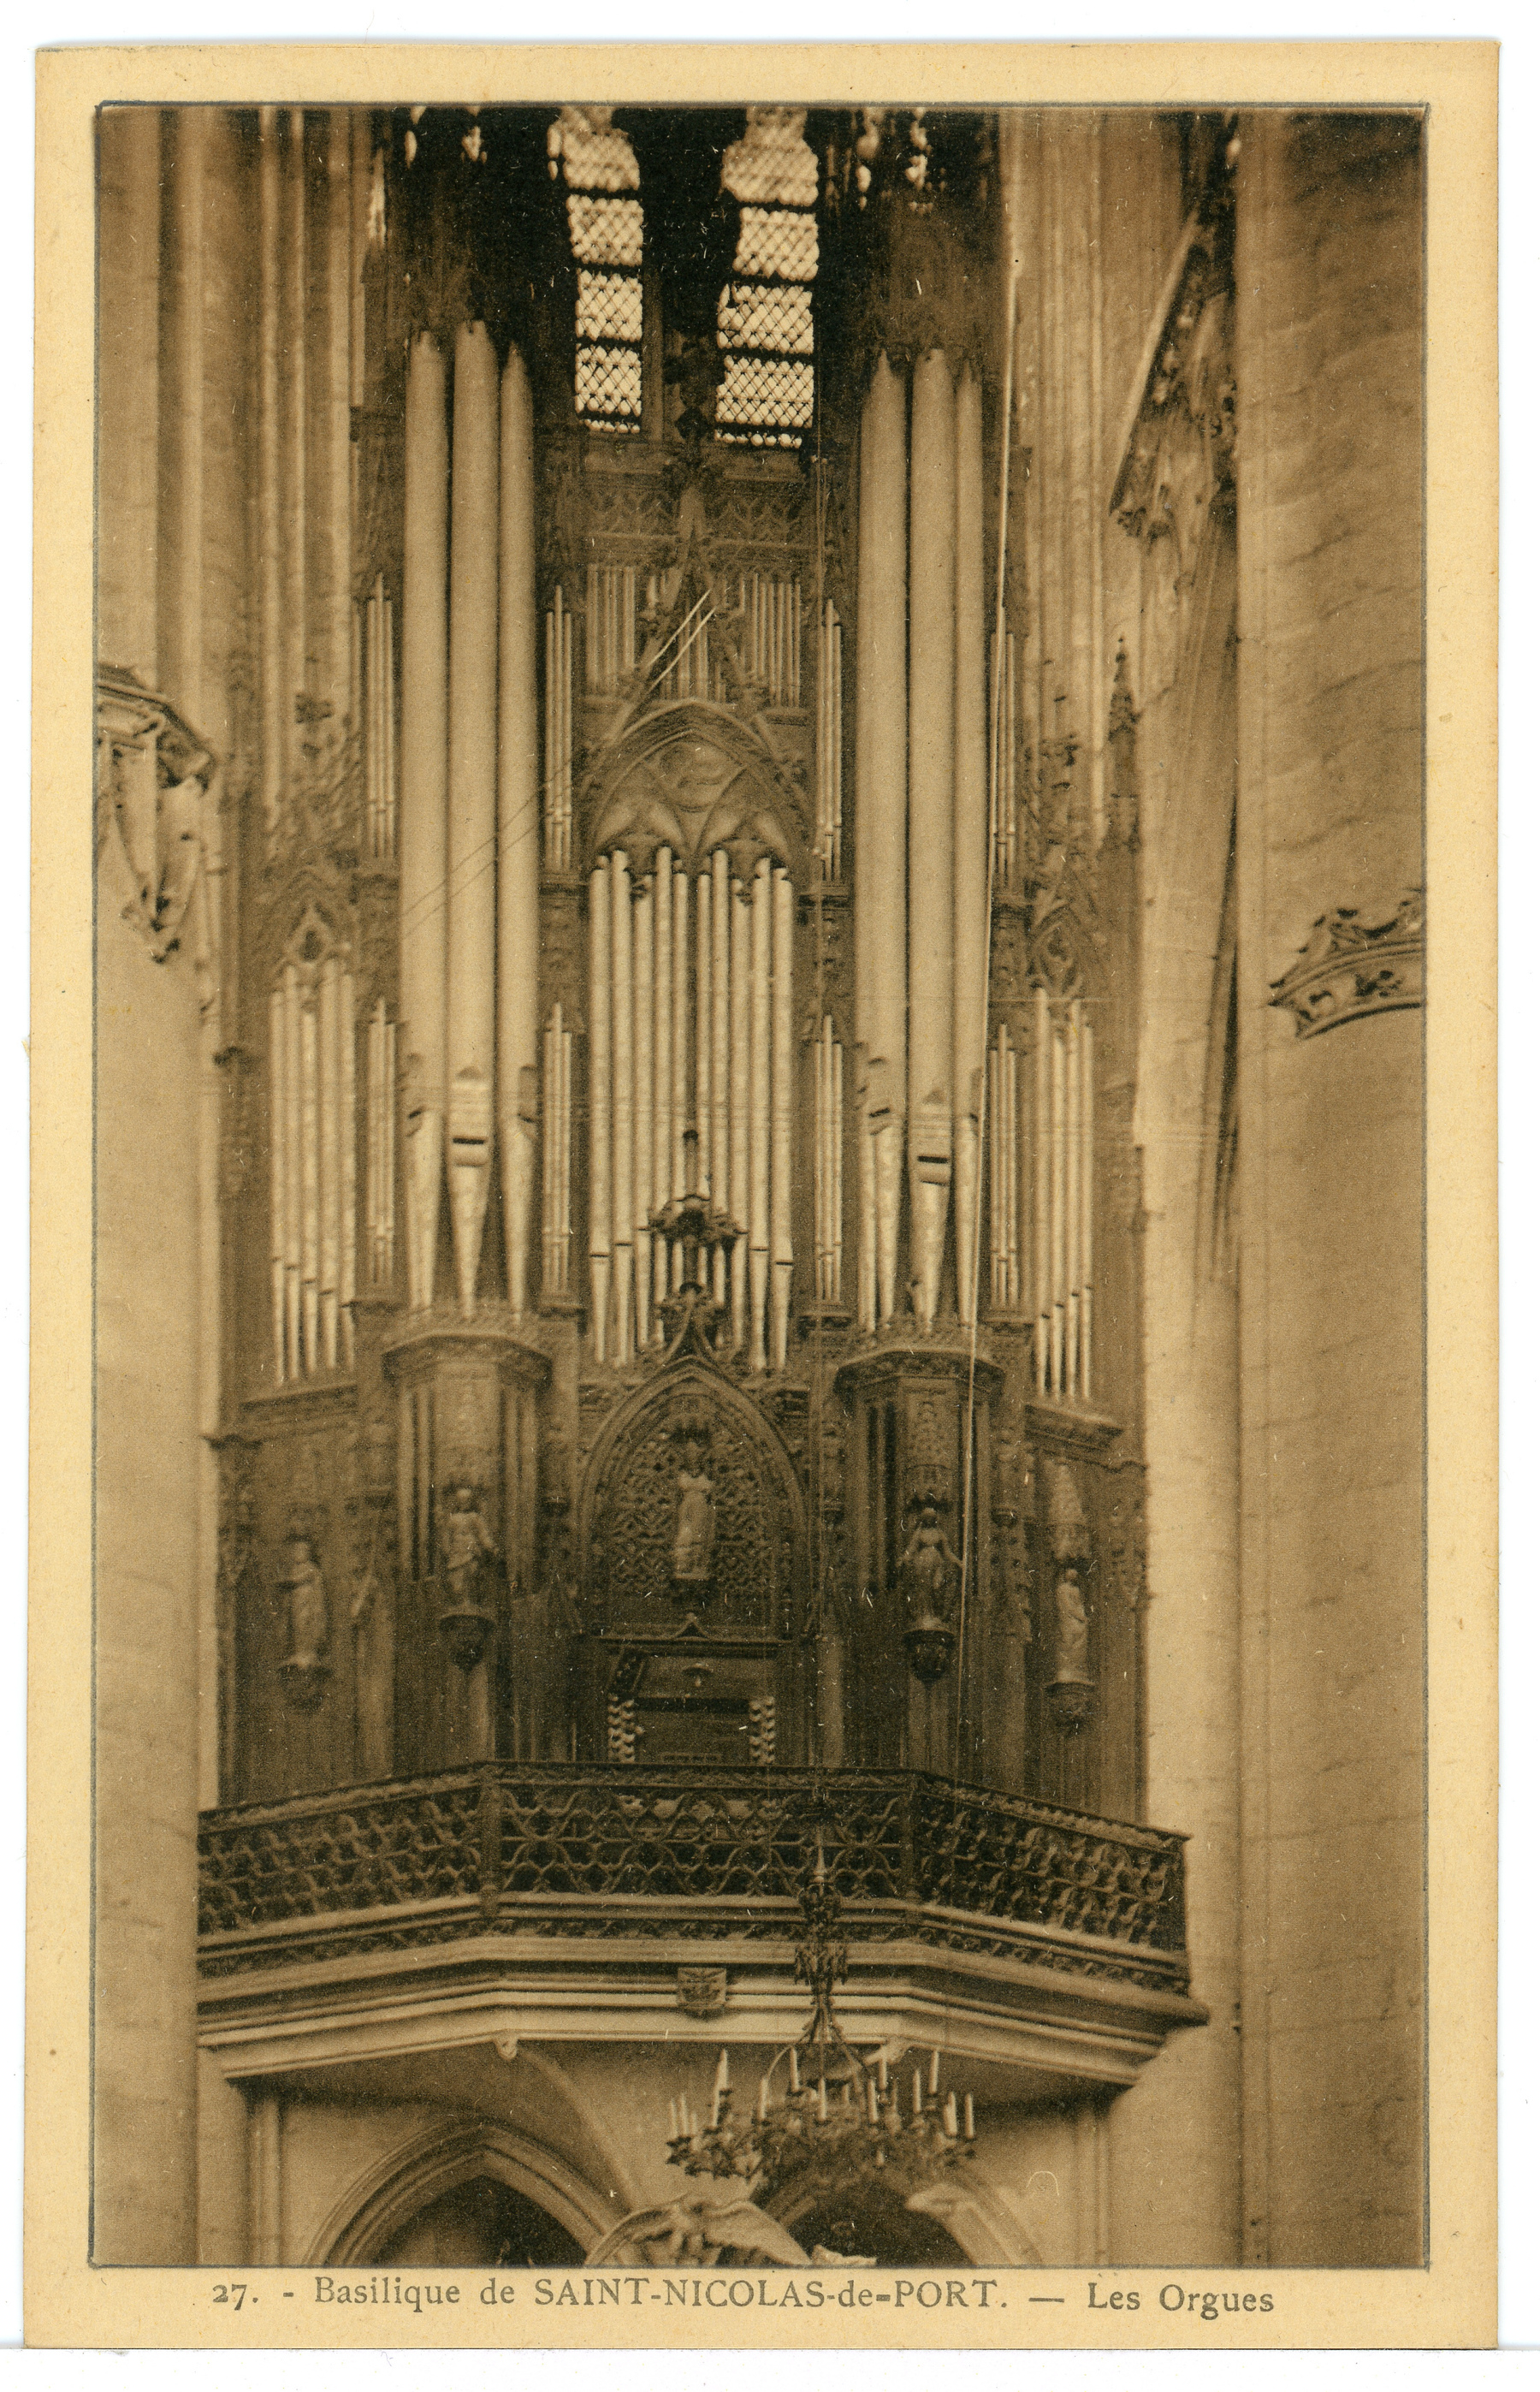 Contenu du Basilique de Saint-Nicolas-de-Port. Les orgues.